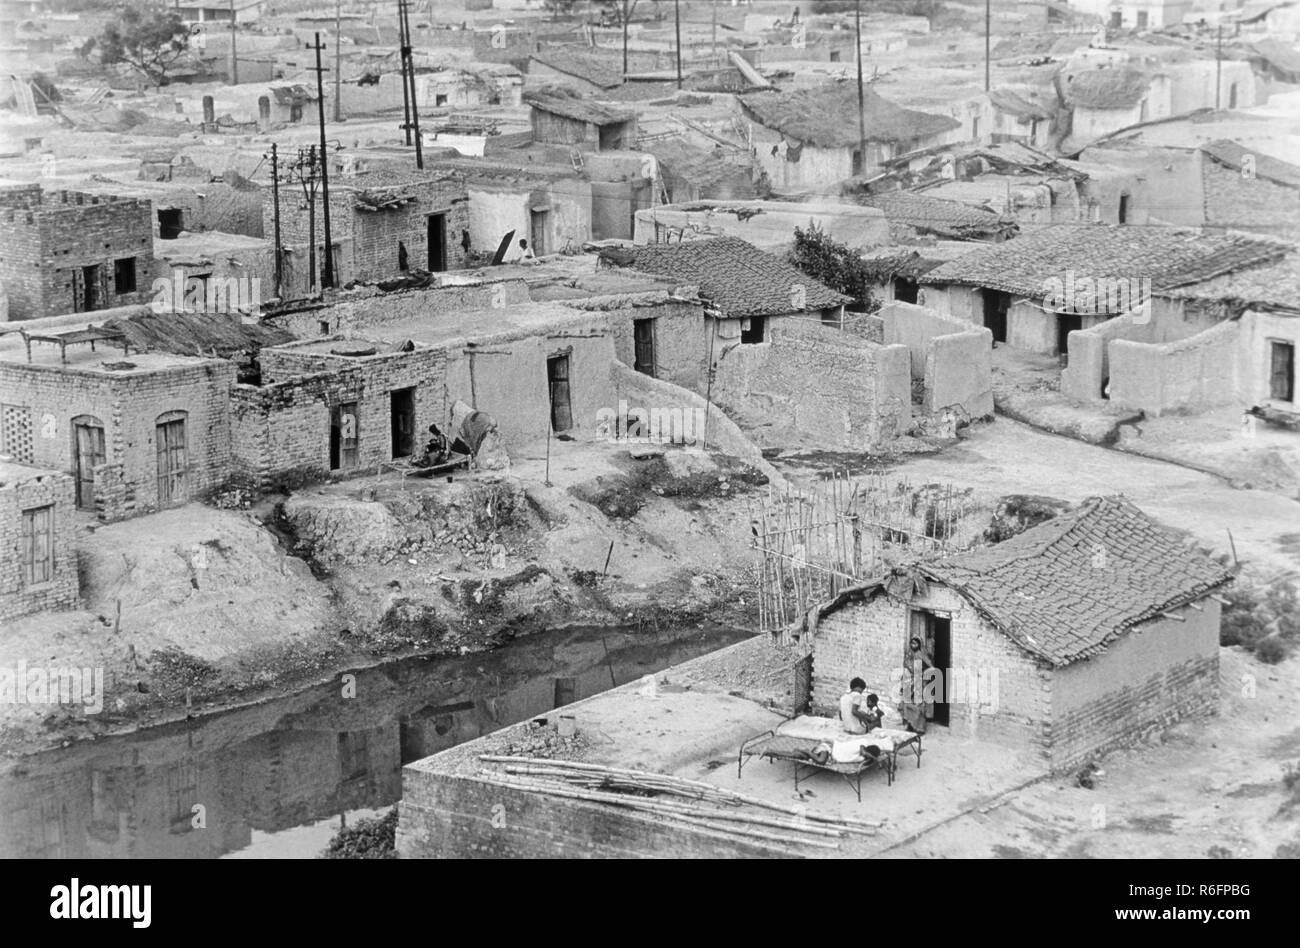 Colonia de viviendas de tugurios en Kanpur Uttar Pradesh India, imagen antigua de la cosecha de 1900s Foto de stock